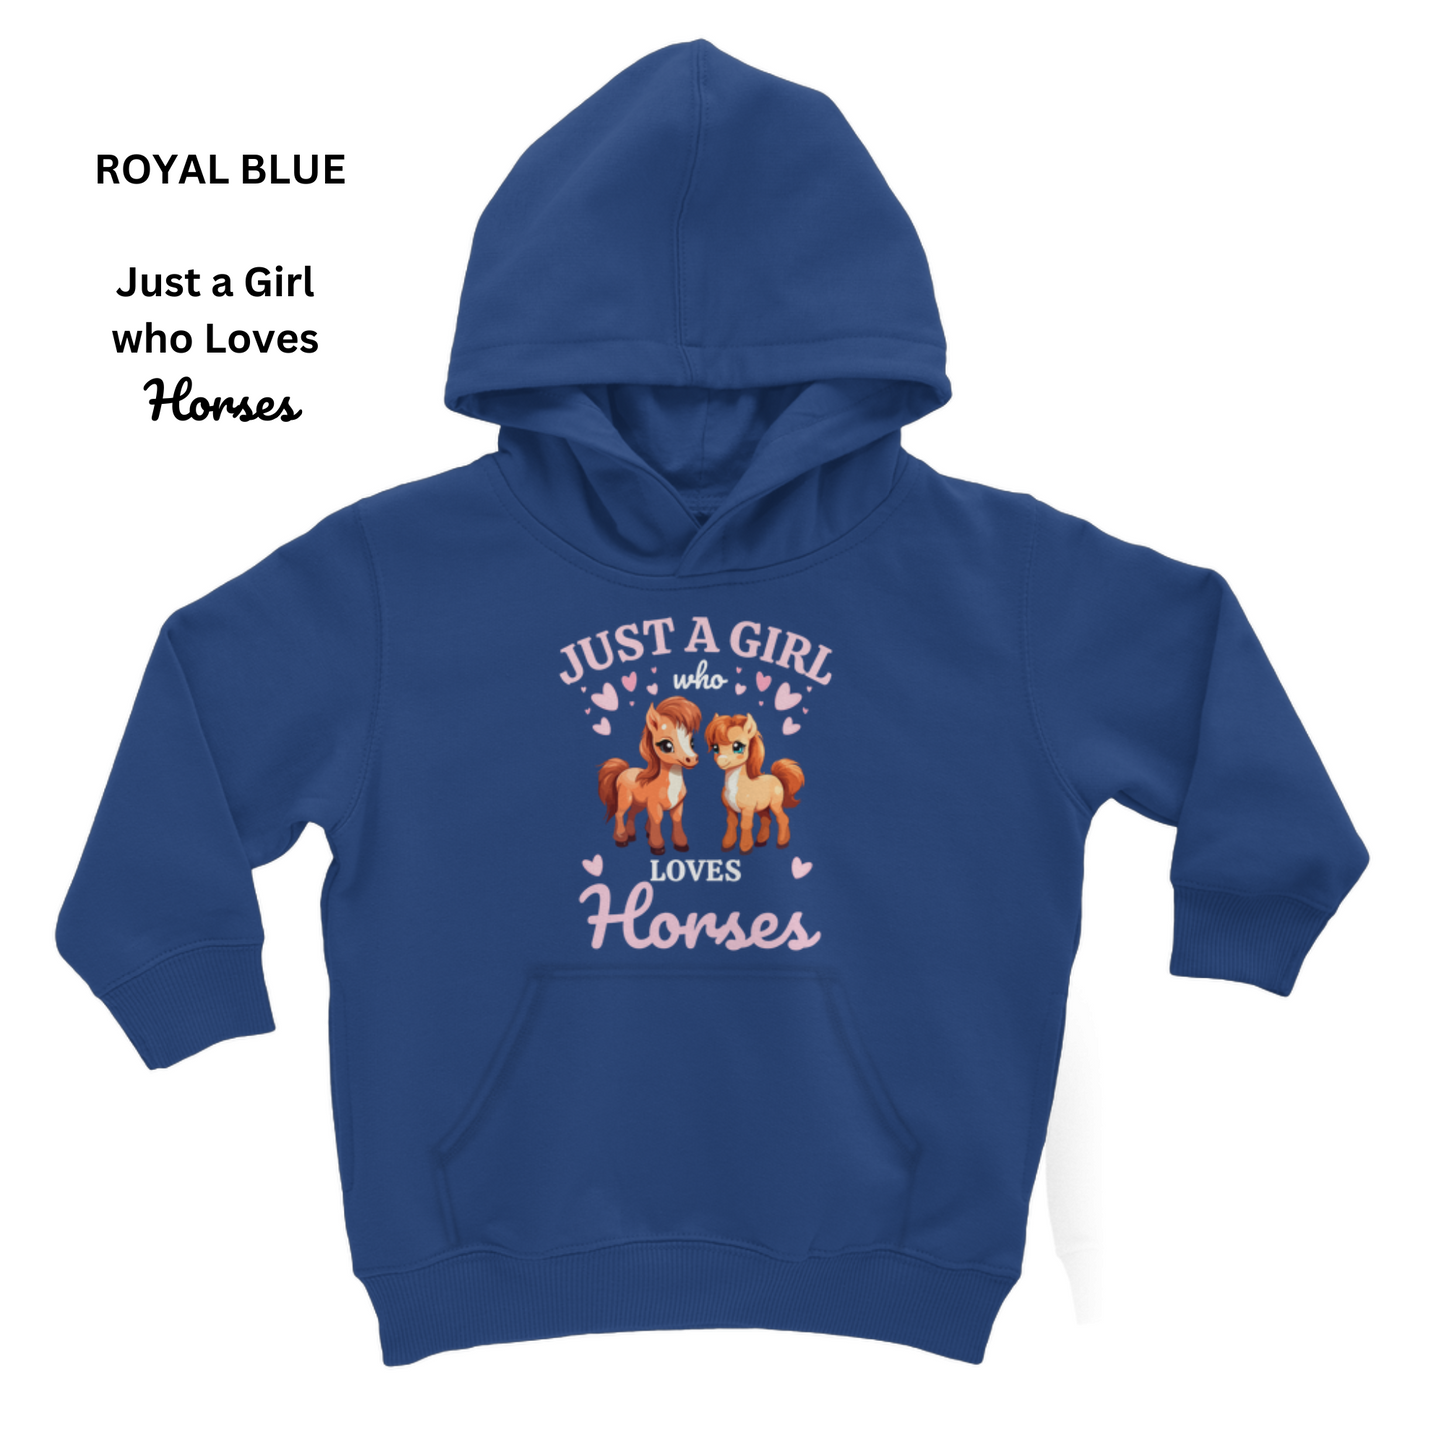 Just a Girl who loves Ponies/Horses - Girls Hoodie